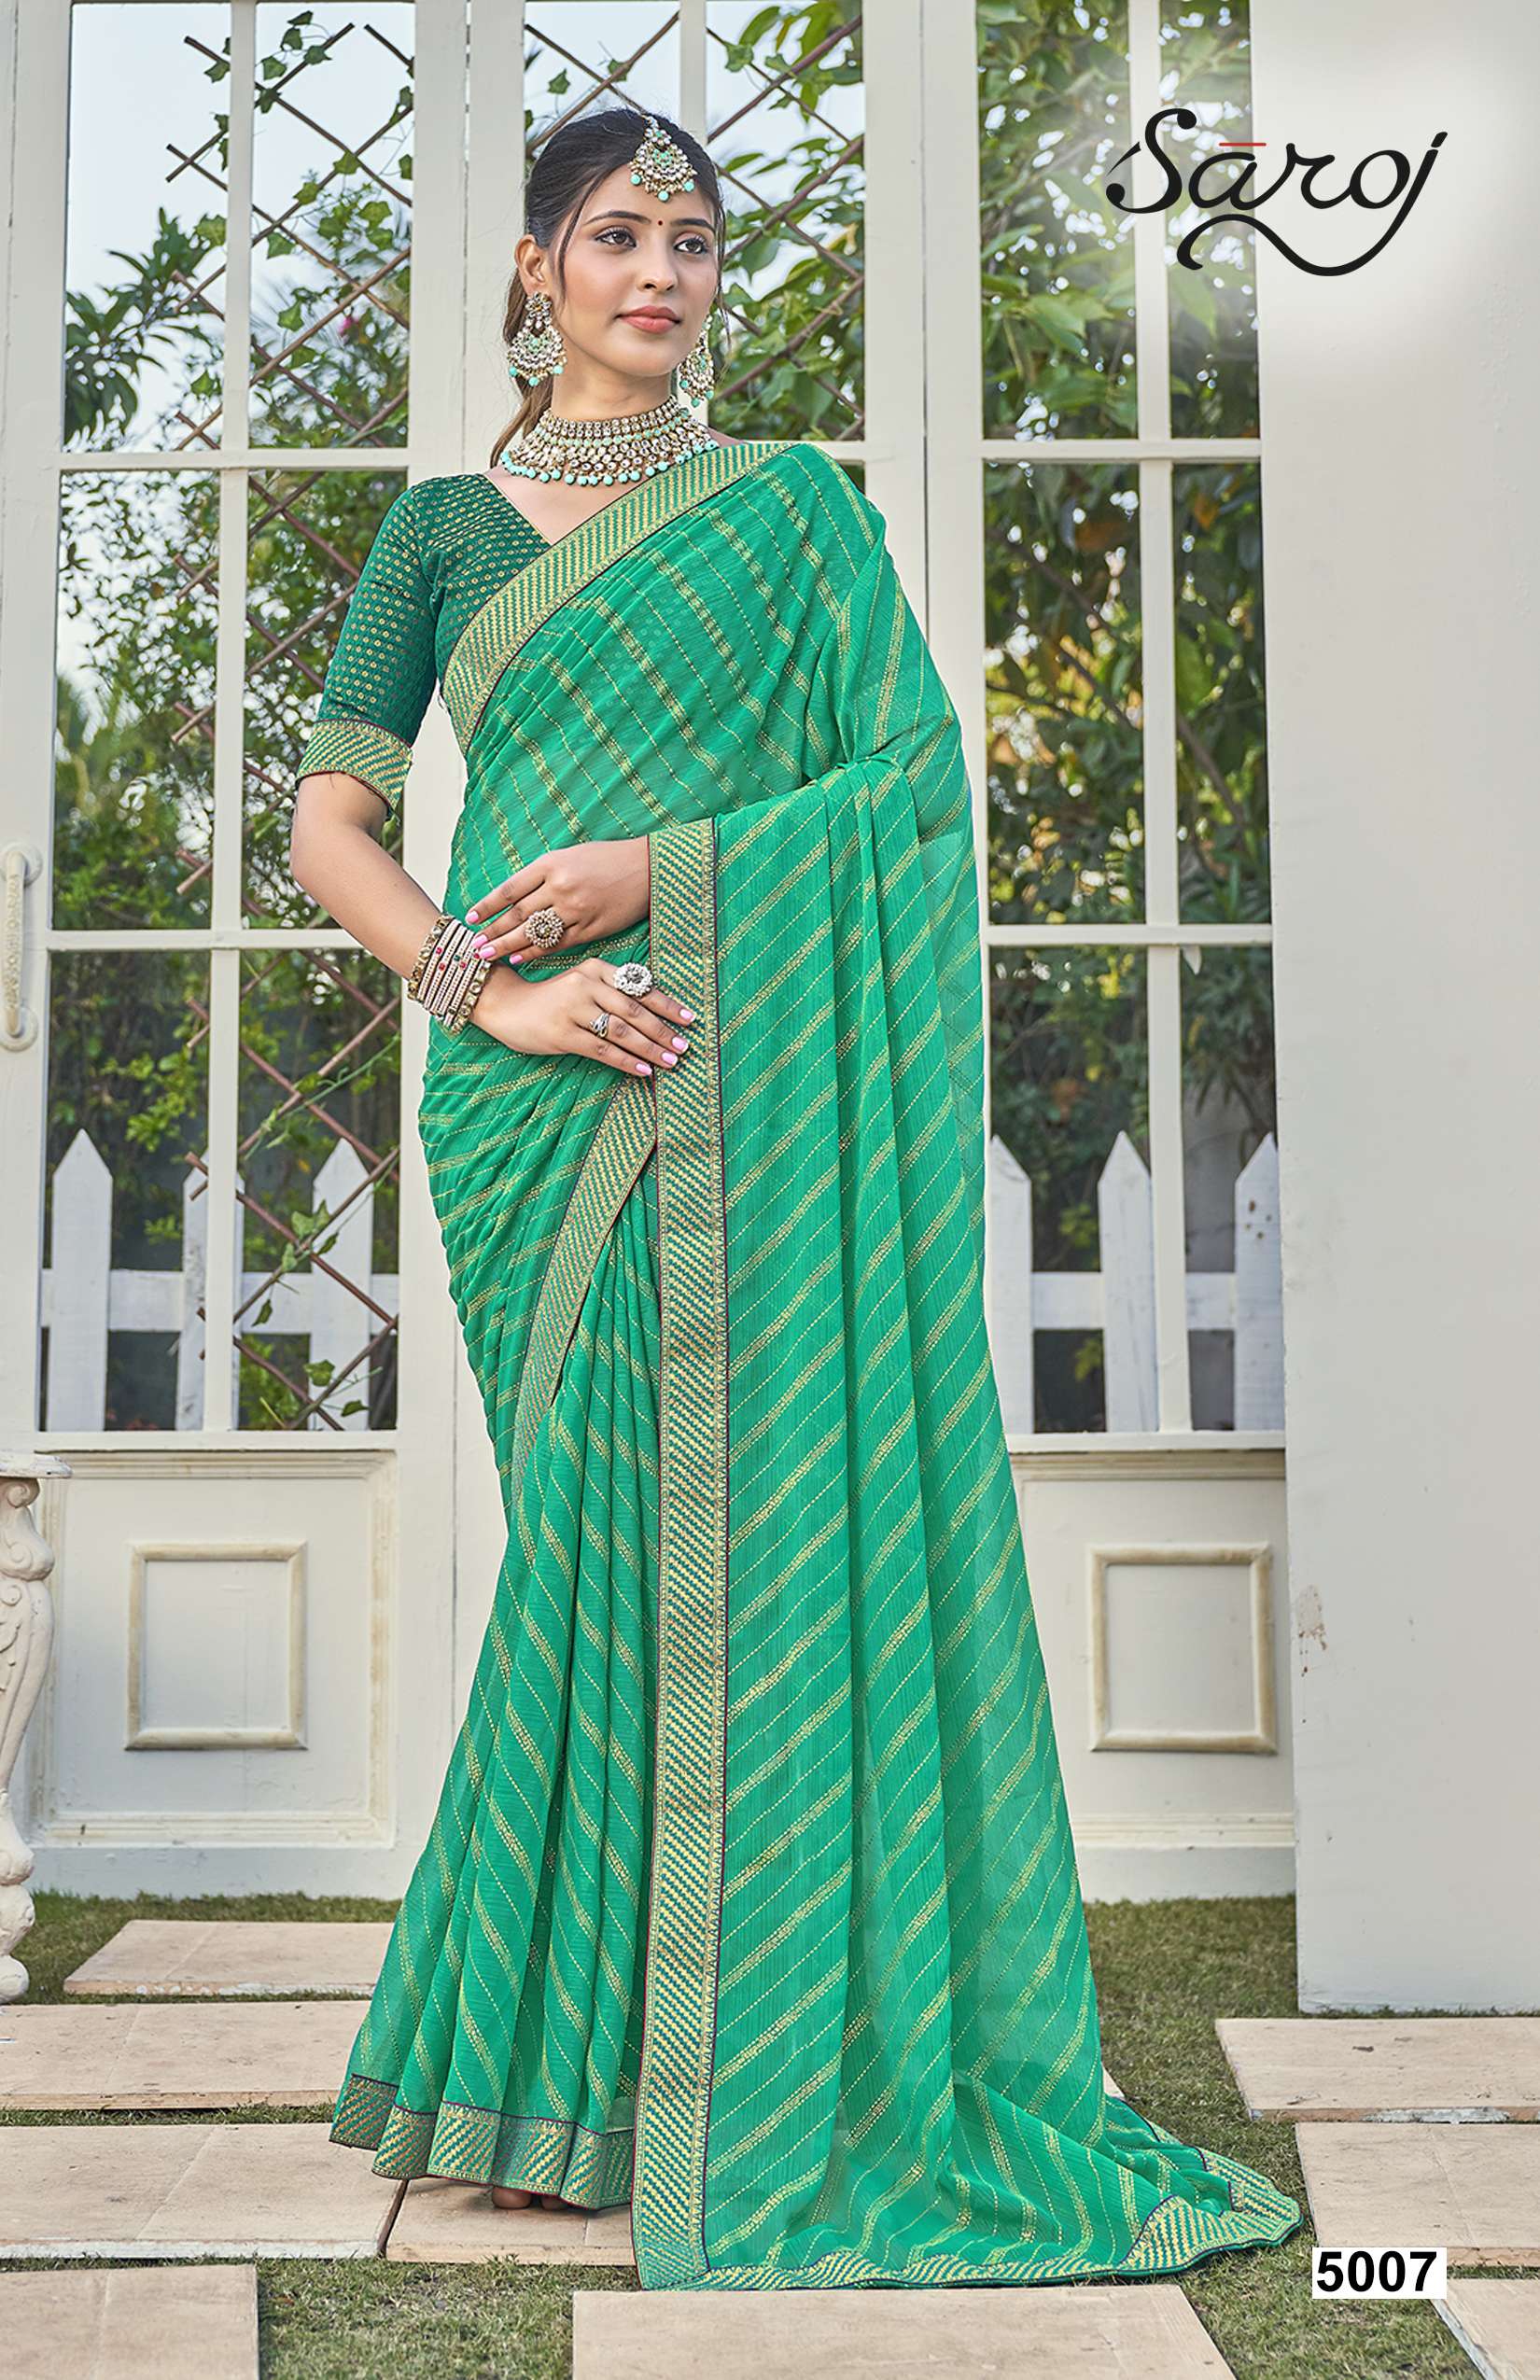 Saroj textile presents Madhubani Vol 5 casual sarees catalogue